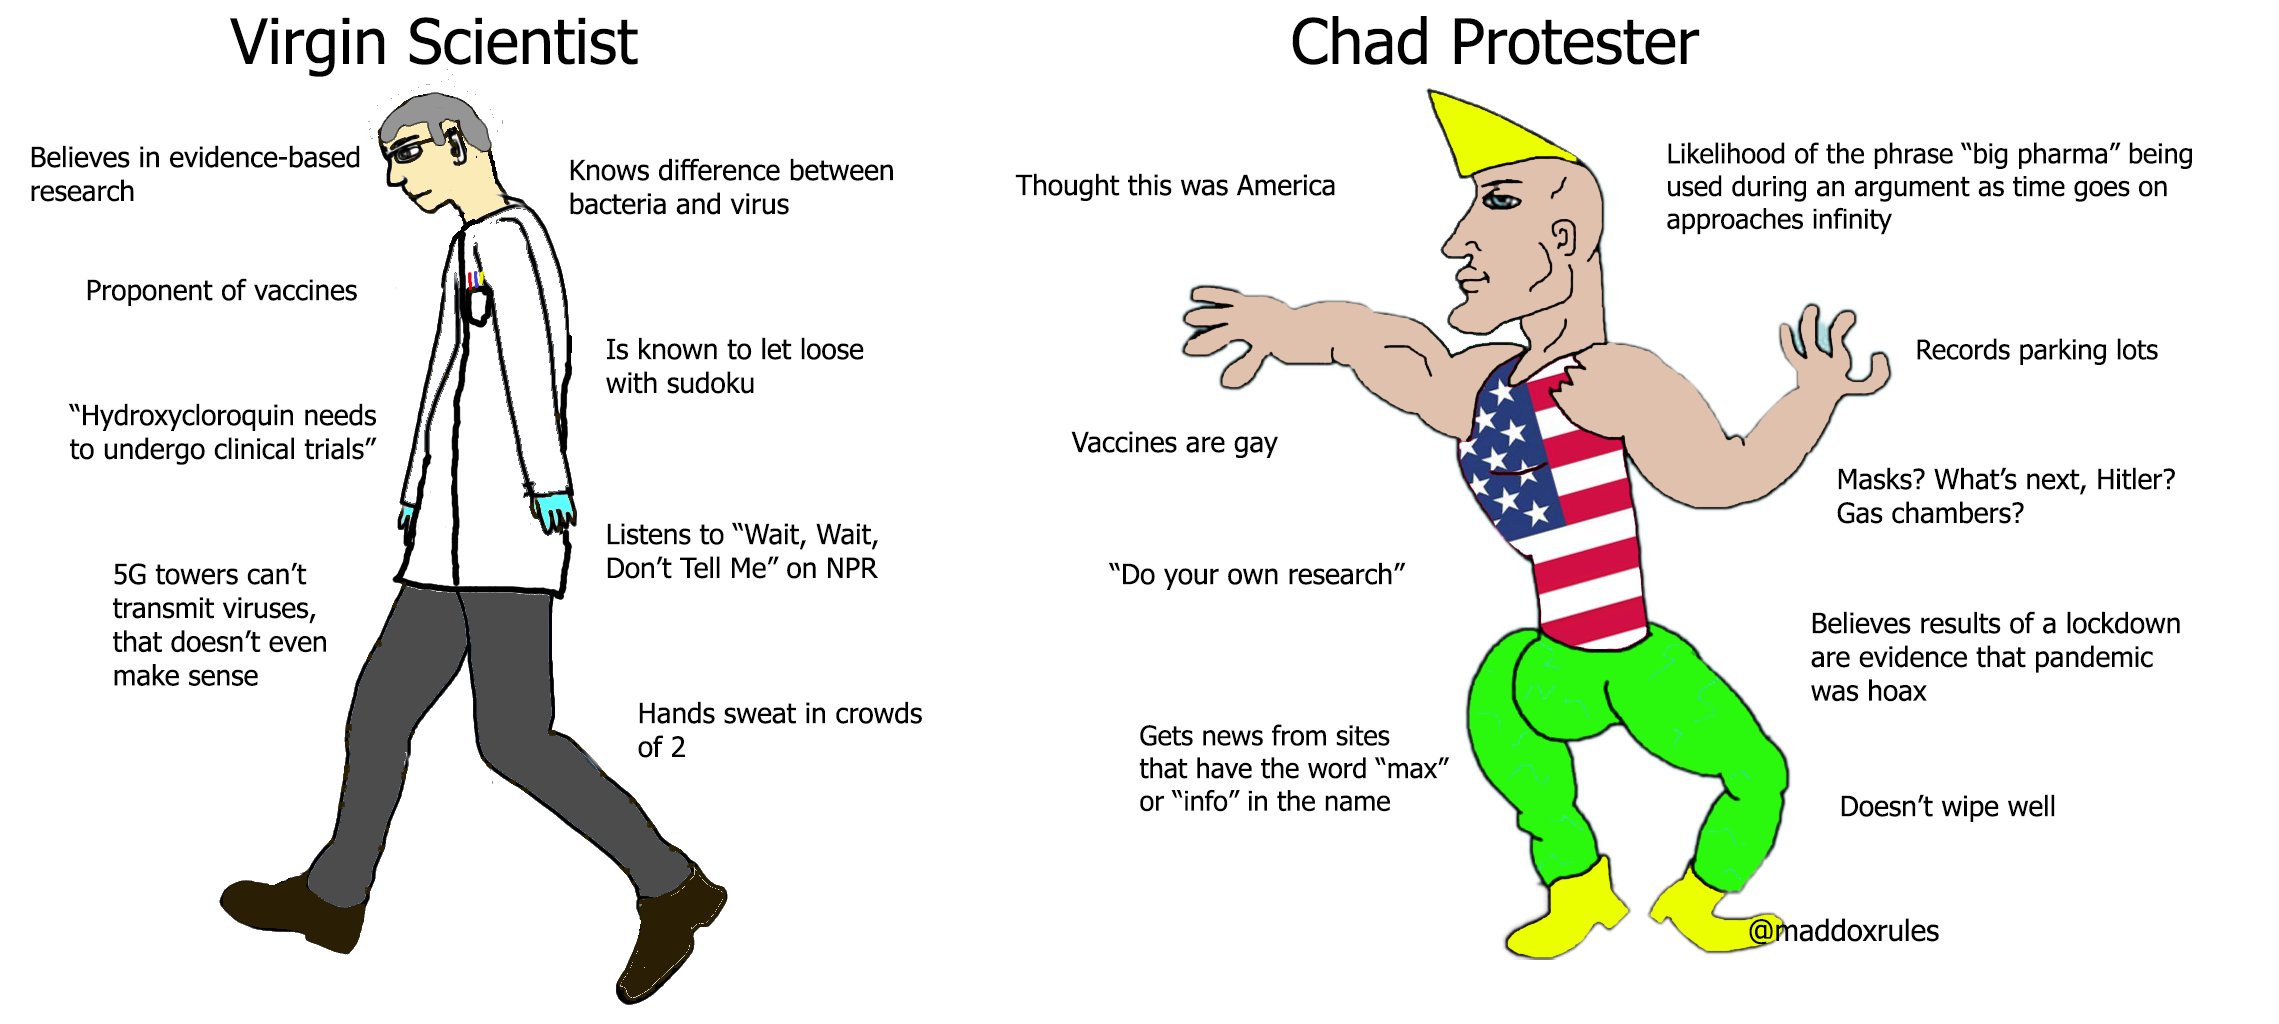 Virgin Scientist vs Chad Protester. 